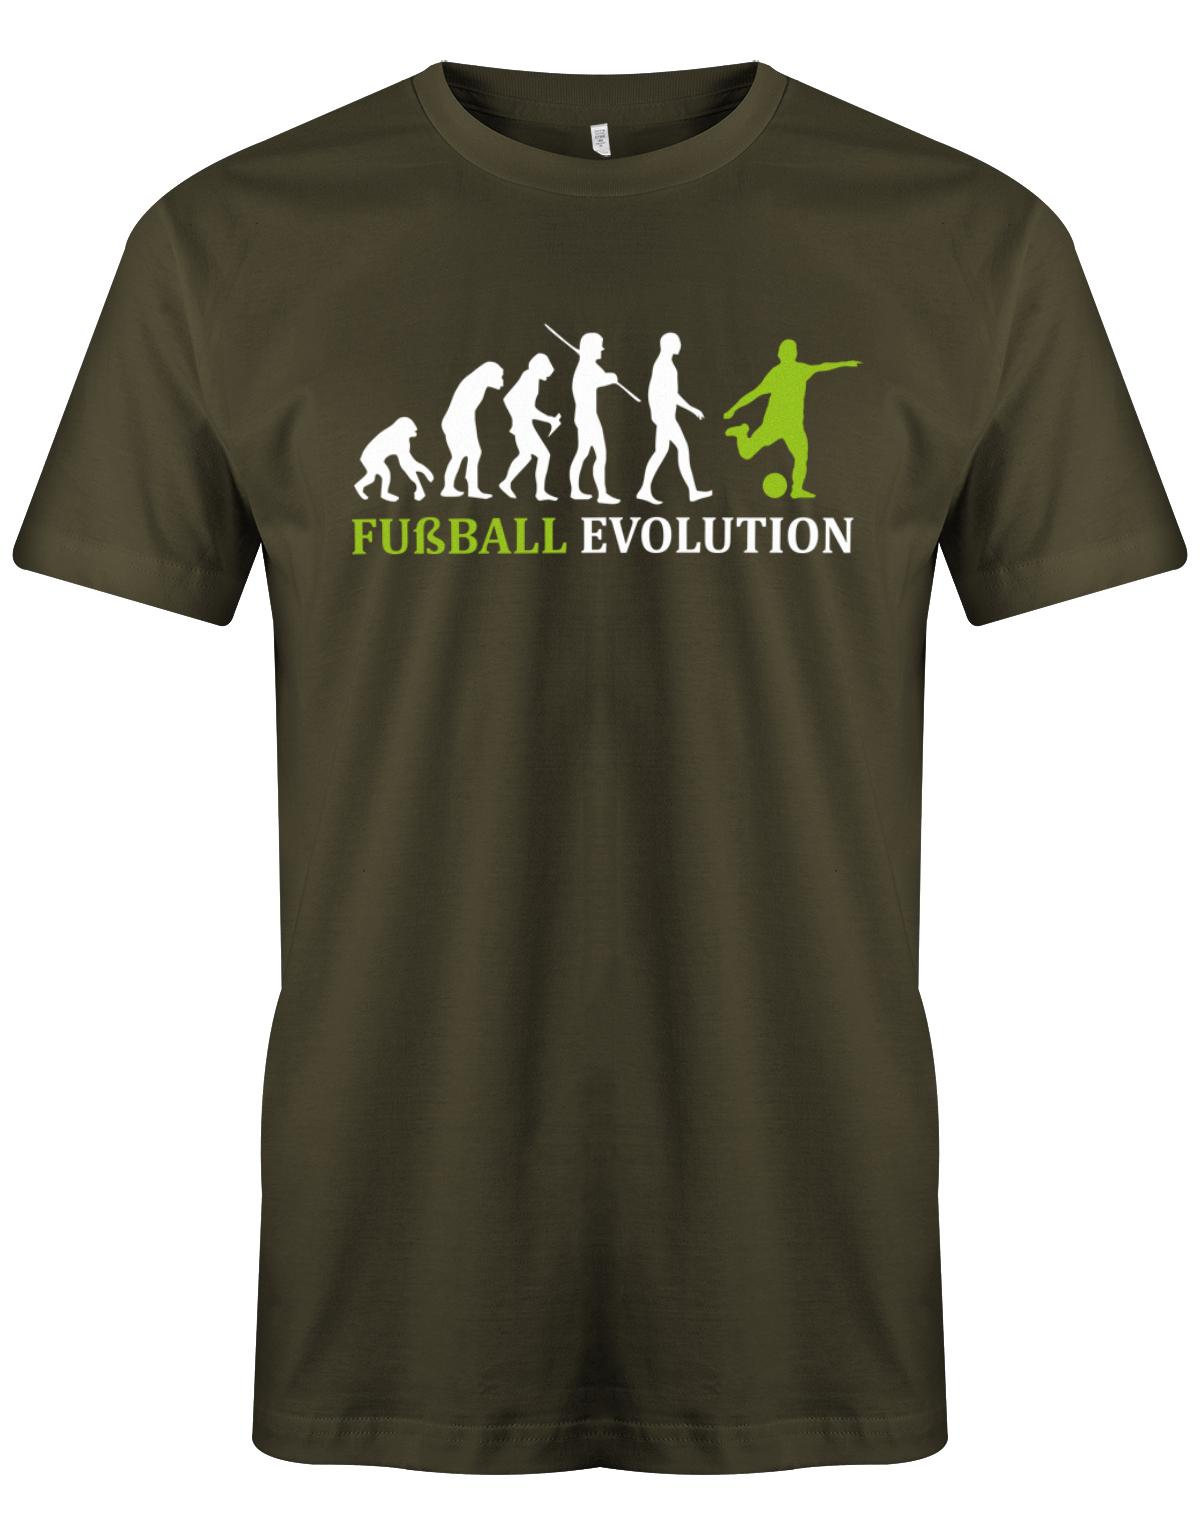 Fussball-Evolution-Herren-Shirt-Army-Gr-n